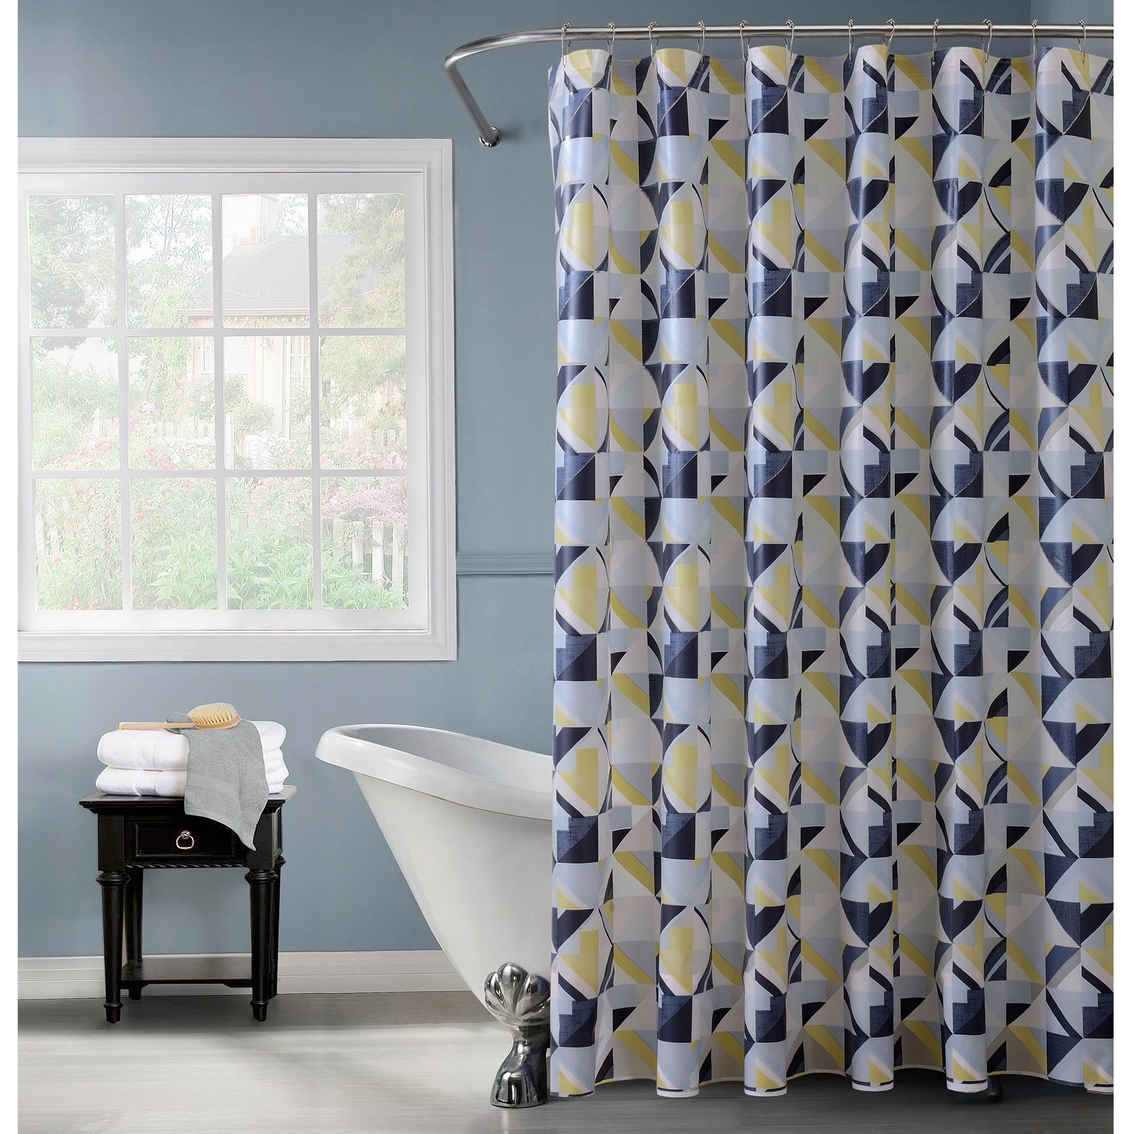 Bath Bliss Geometric Design Shower Curtain - Image 2 of 2